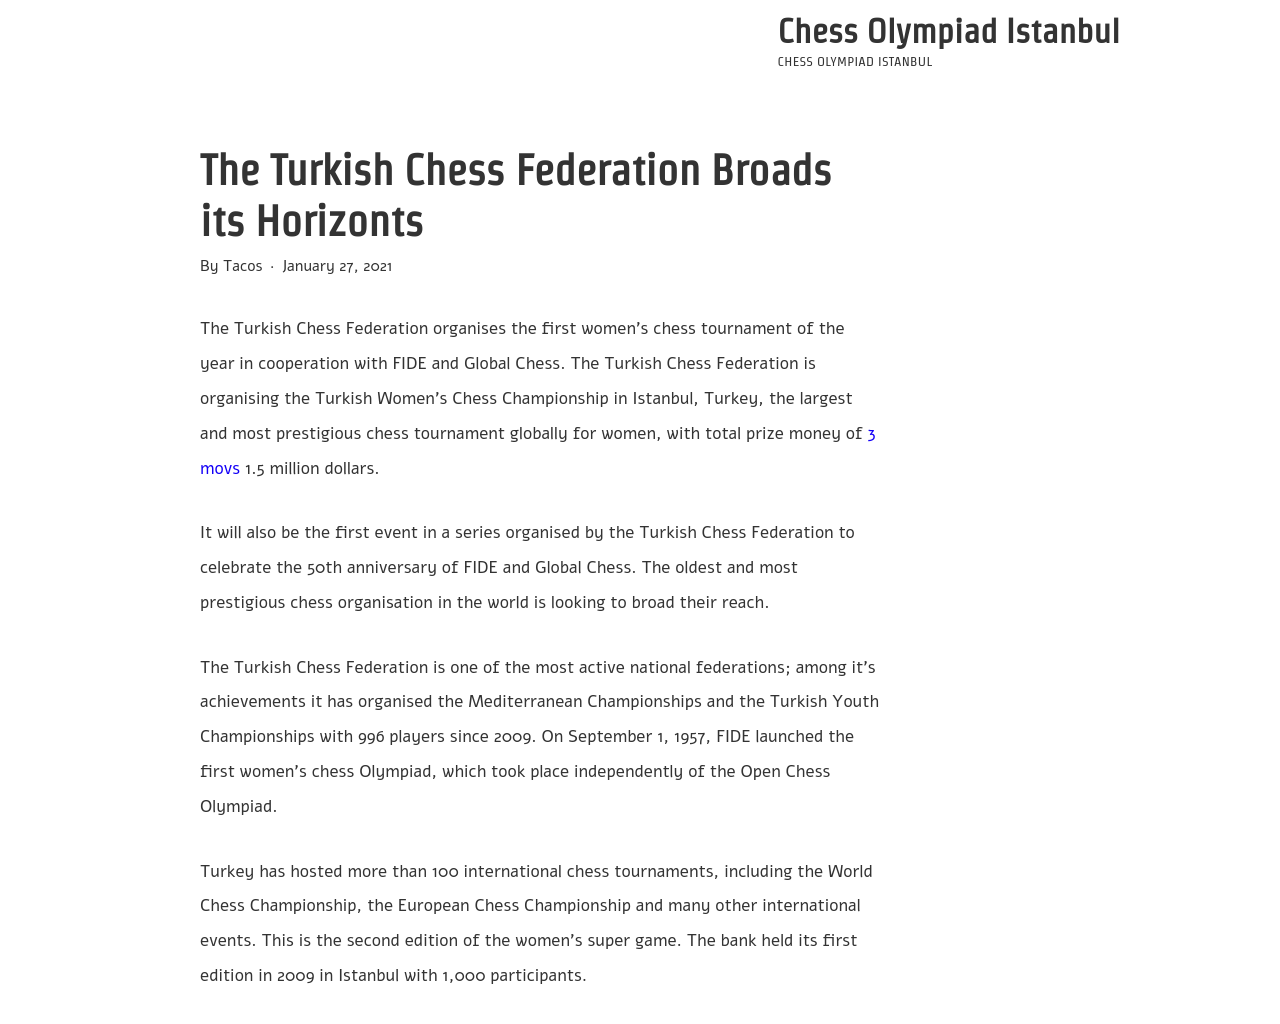 chessolympiadistanbul.com